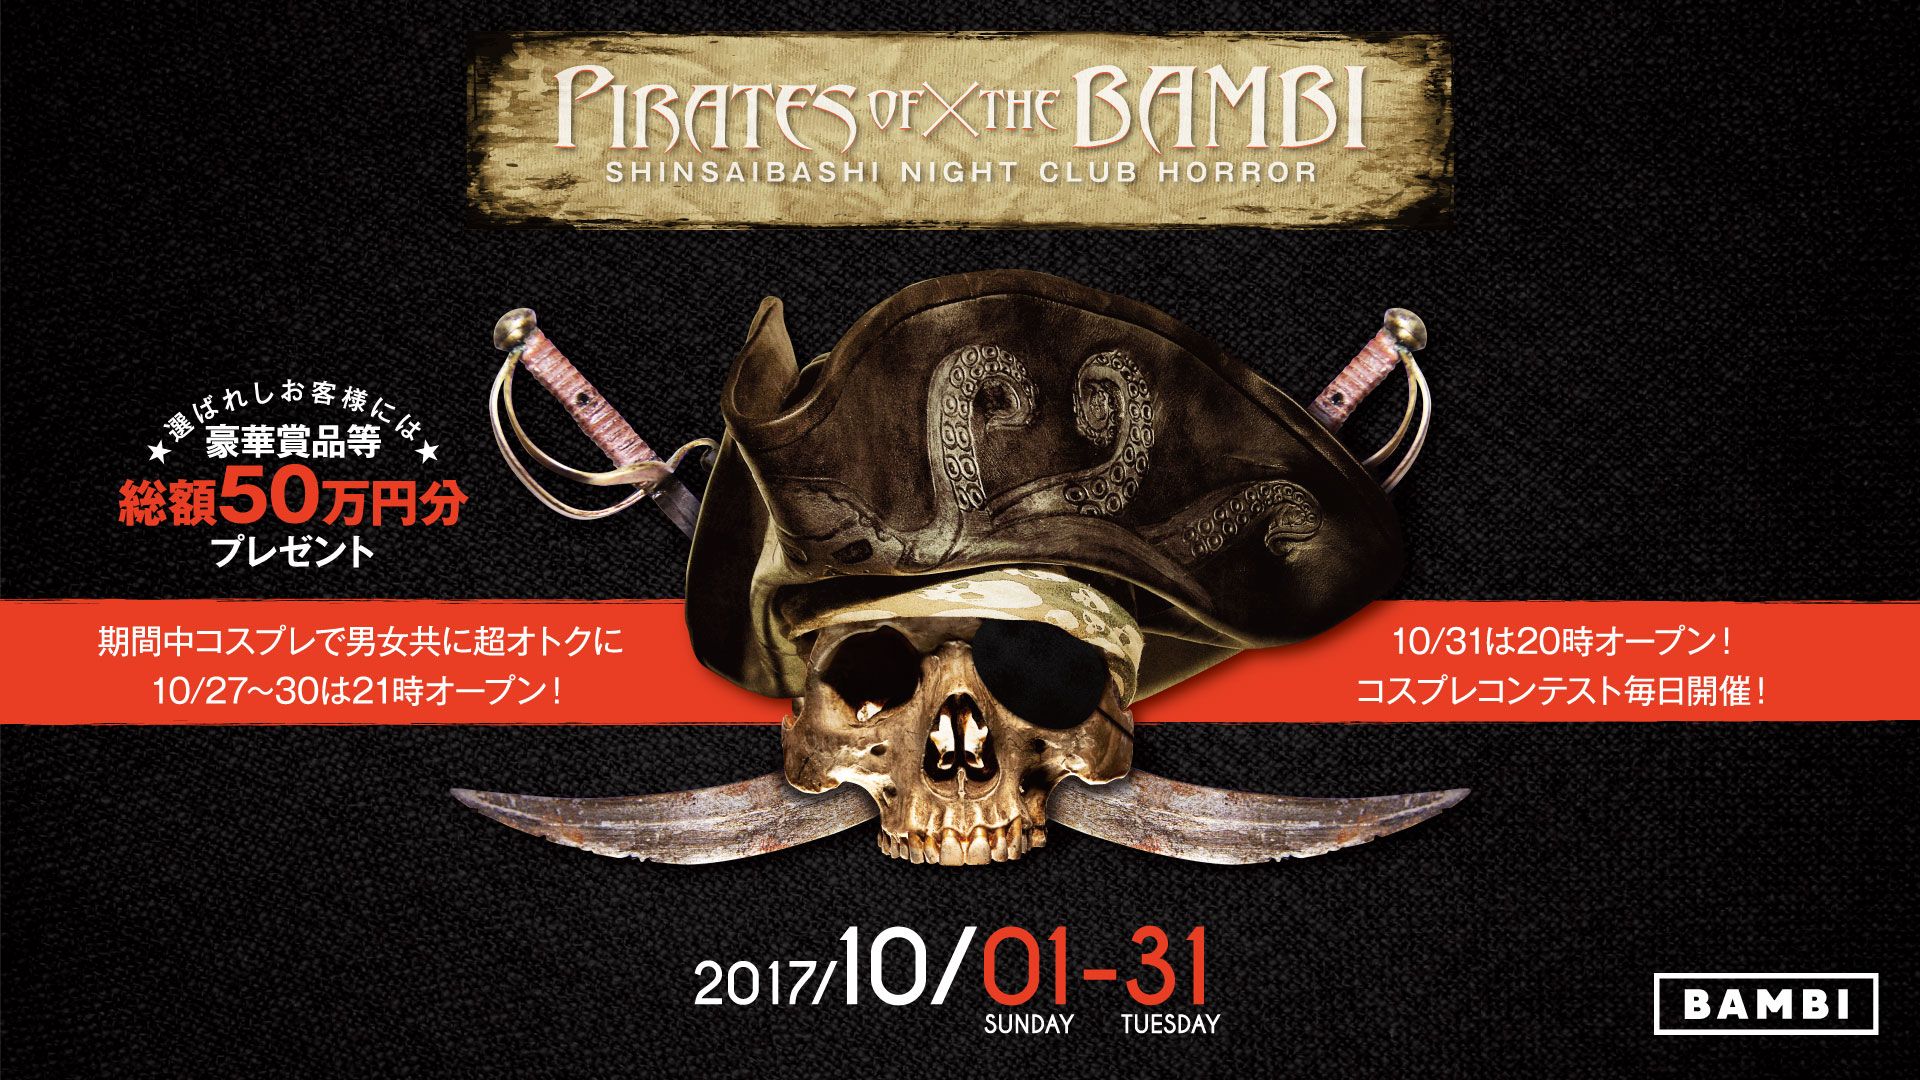 Pirates of the Bambi - Shinsaibashi Nightclub Horror - / Bobby Brown